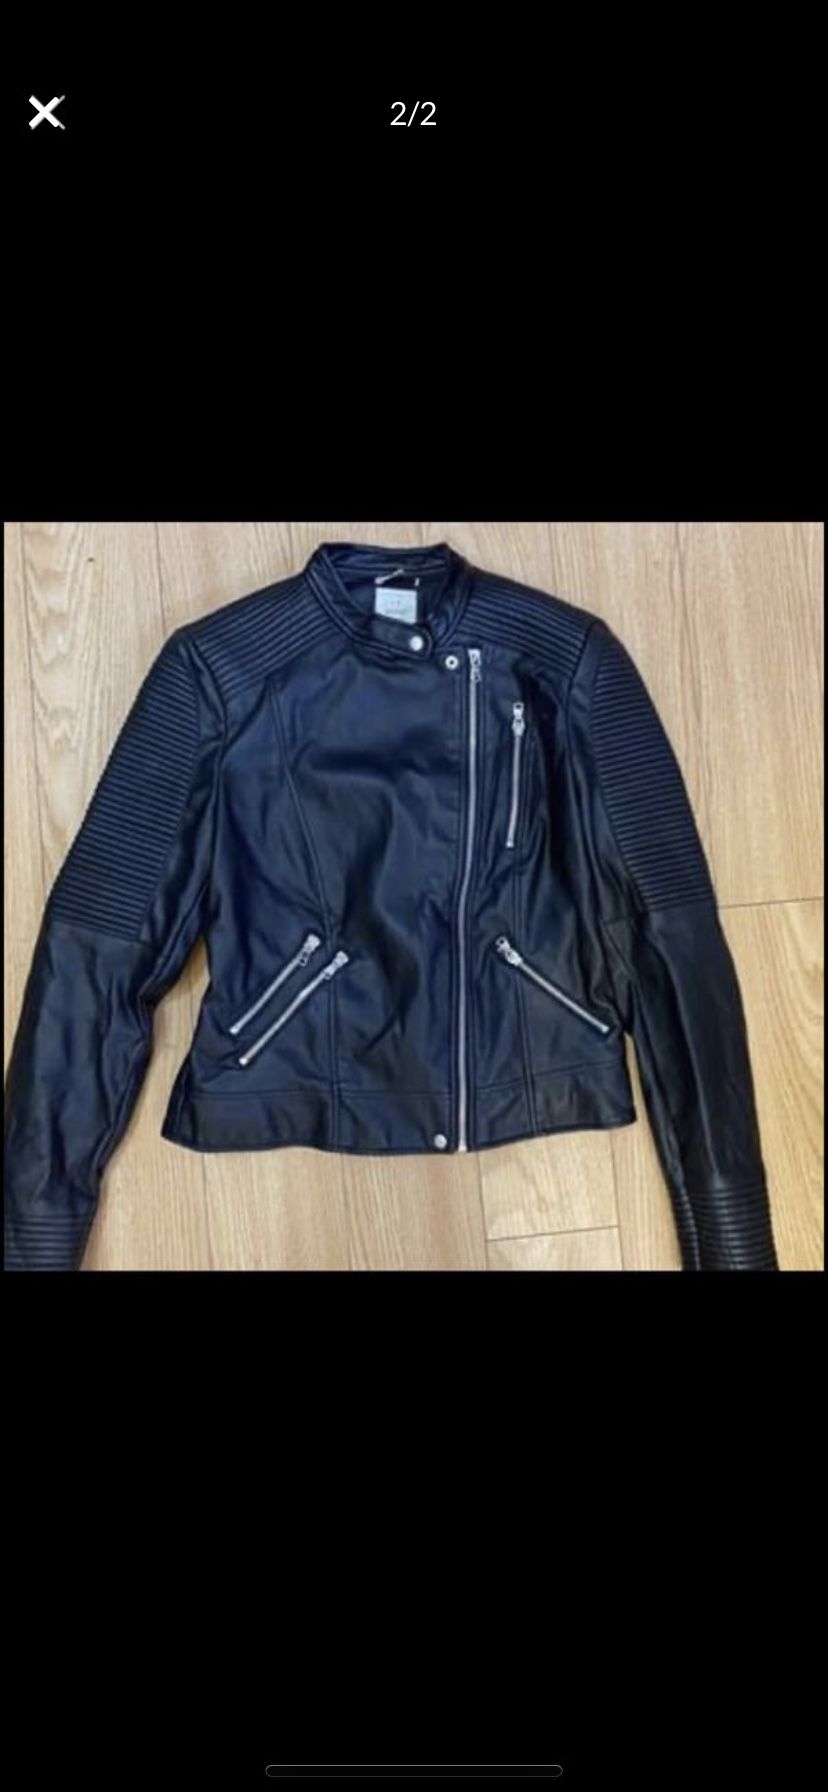 Zara black jacket size L